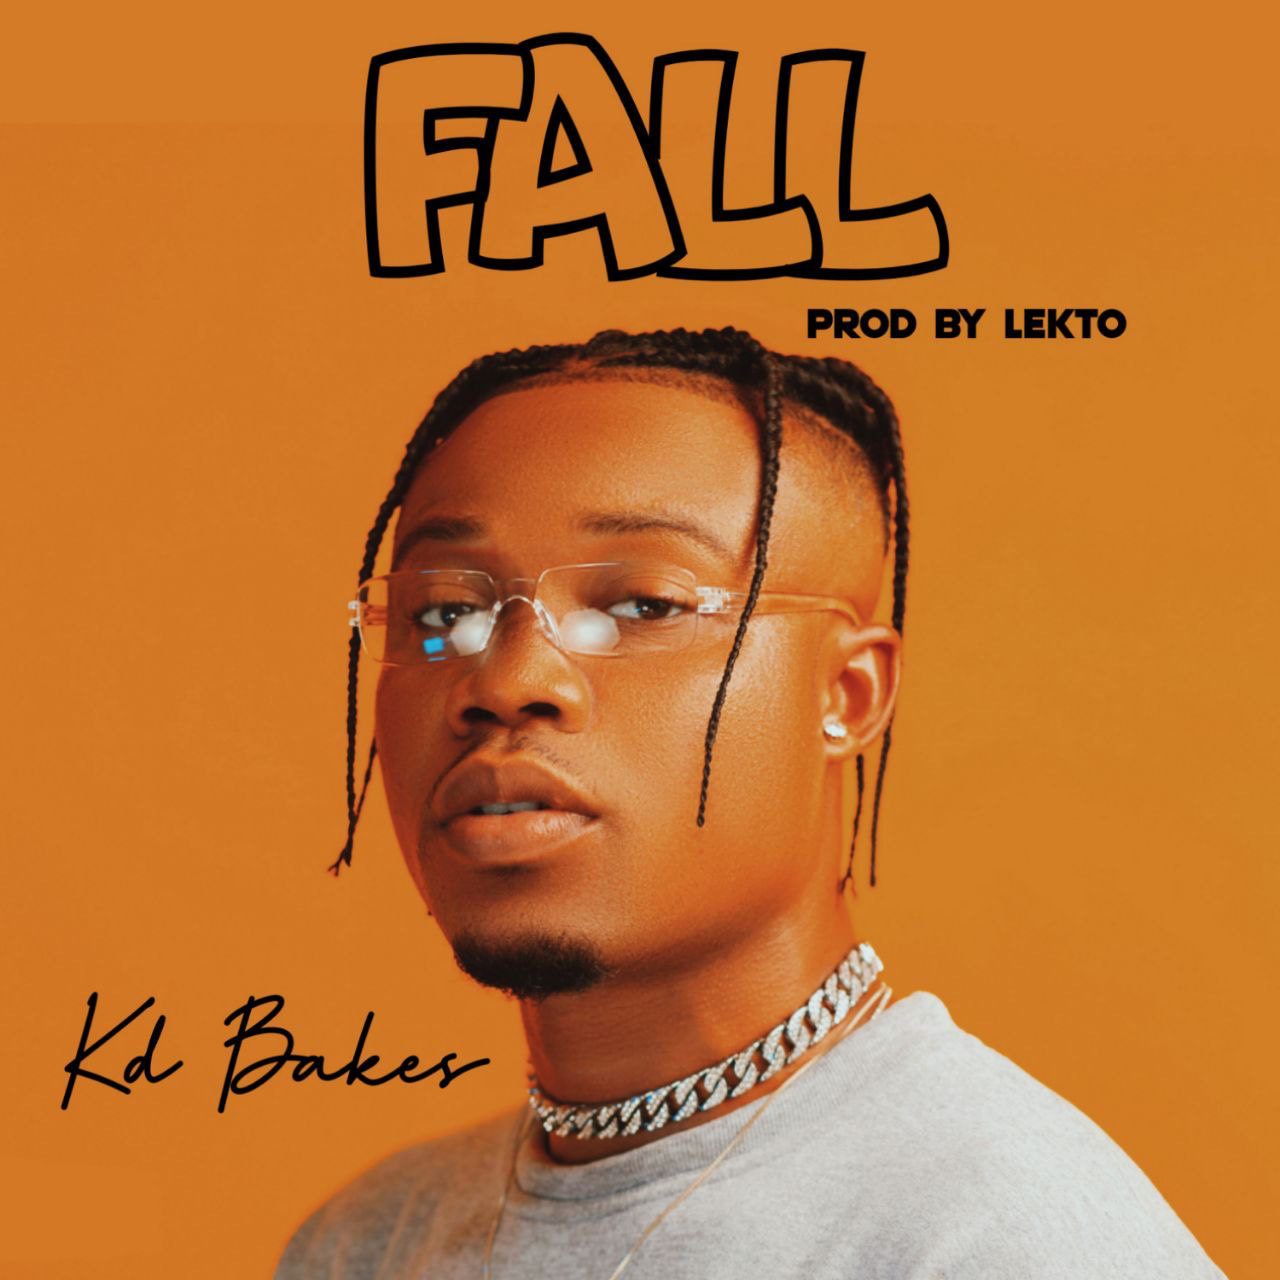 New Music Kd Bakes – Fall